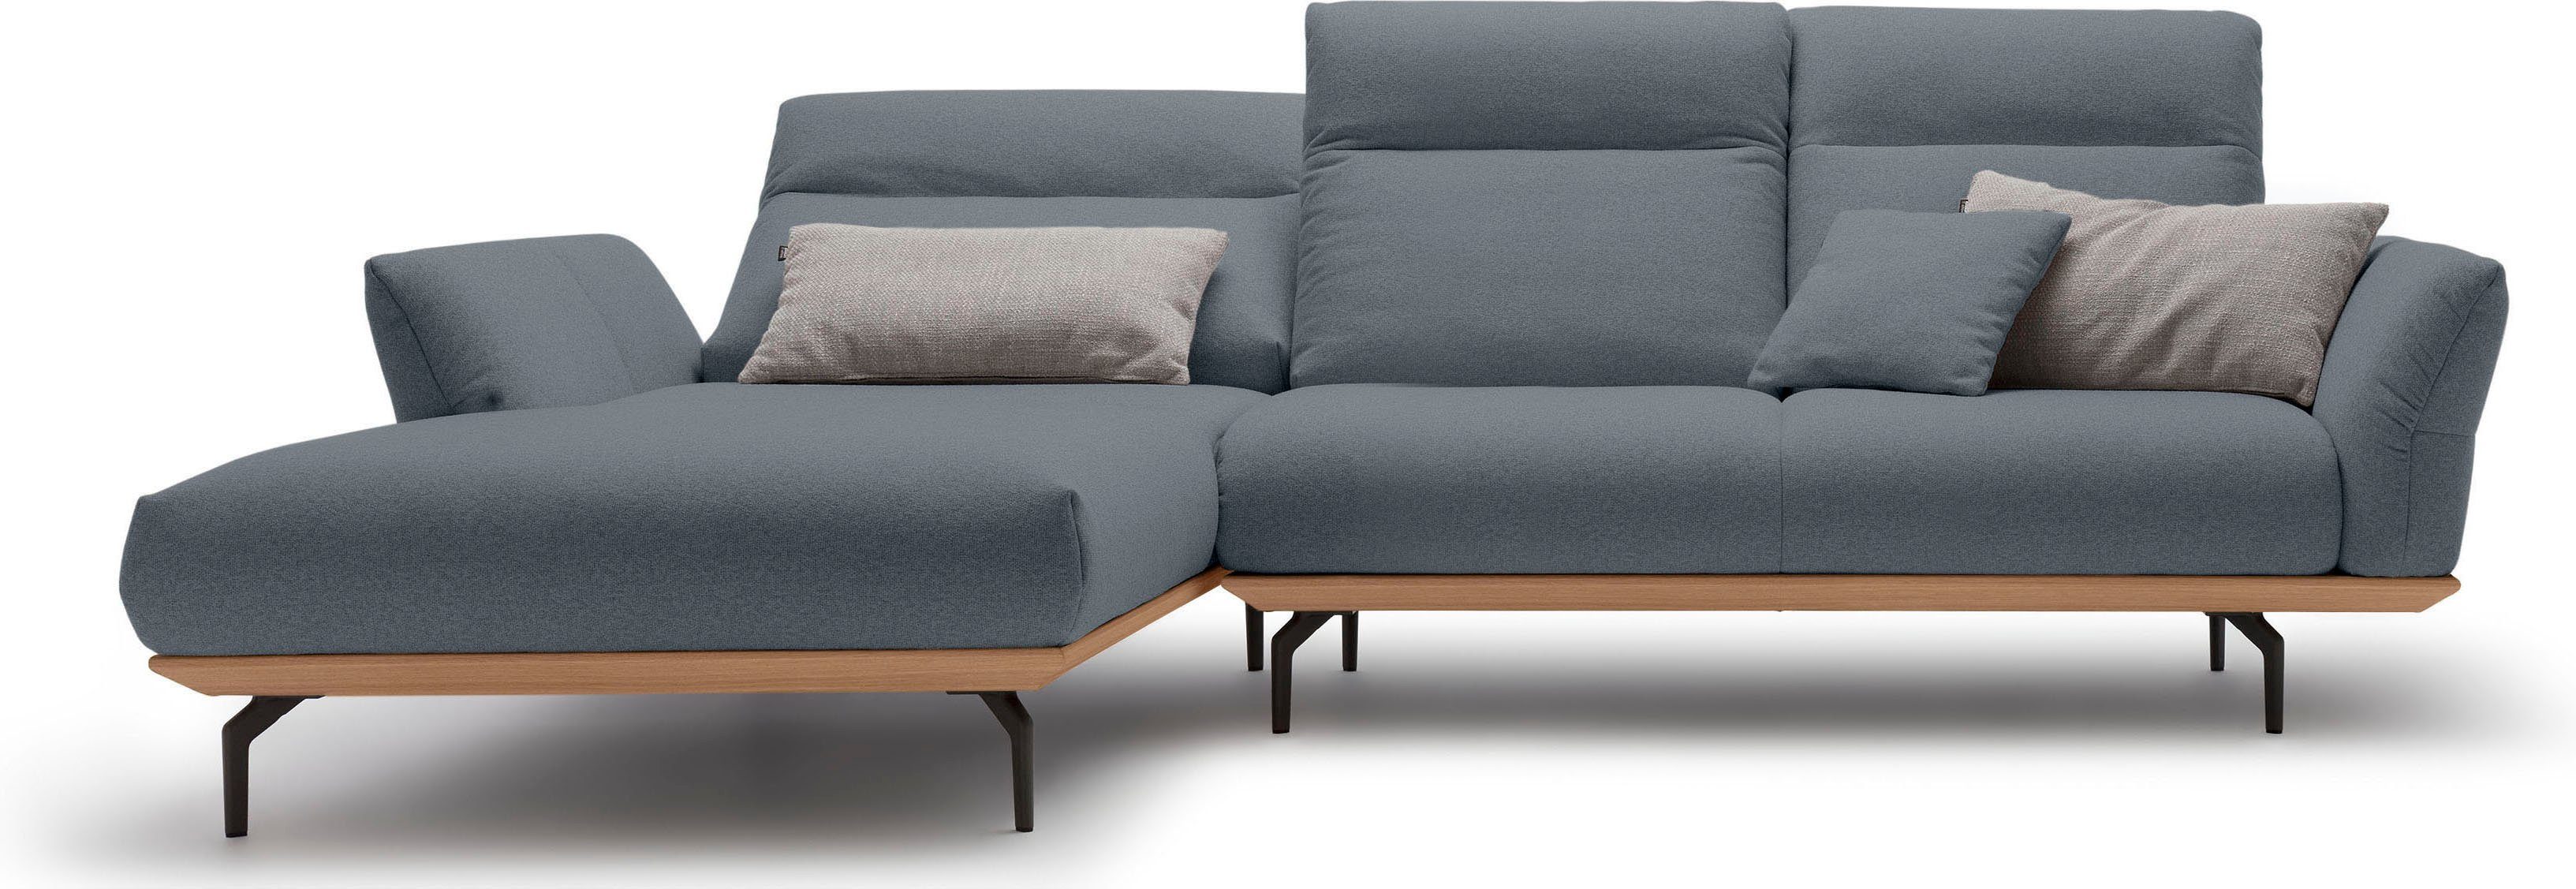 umbragrau, Sockel Alugussfüße Ecksofa sofa hülsta Breite hs.460, Eiche, in cm in 298